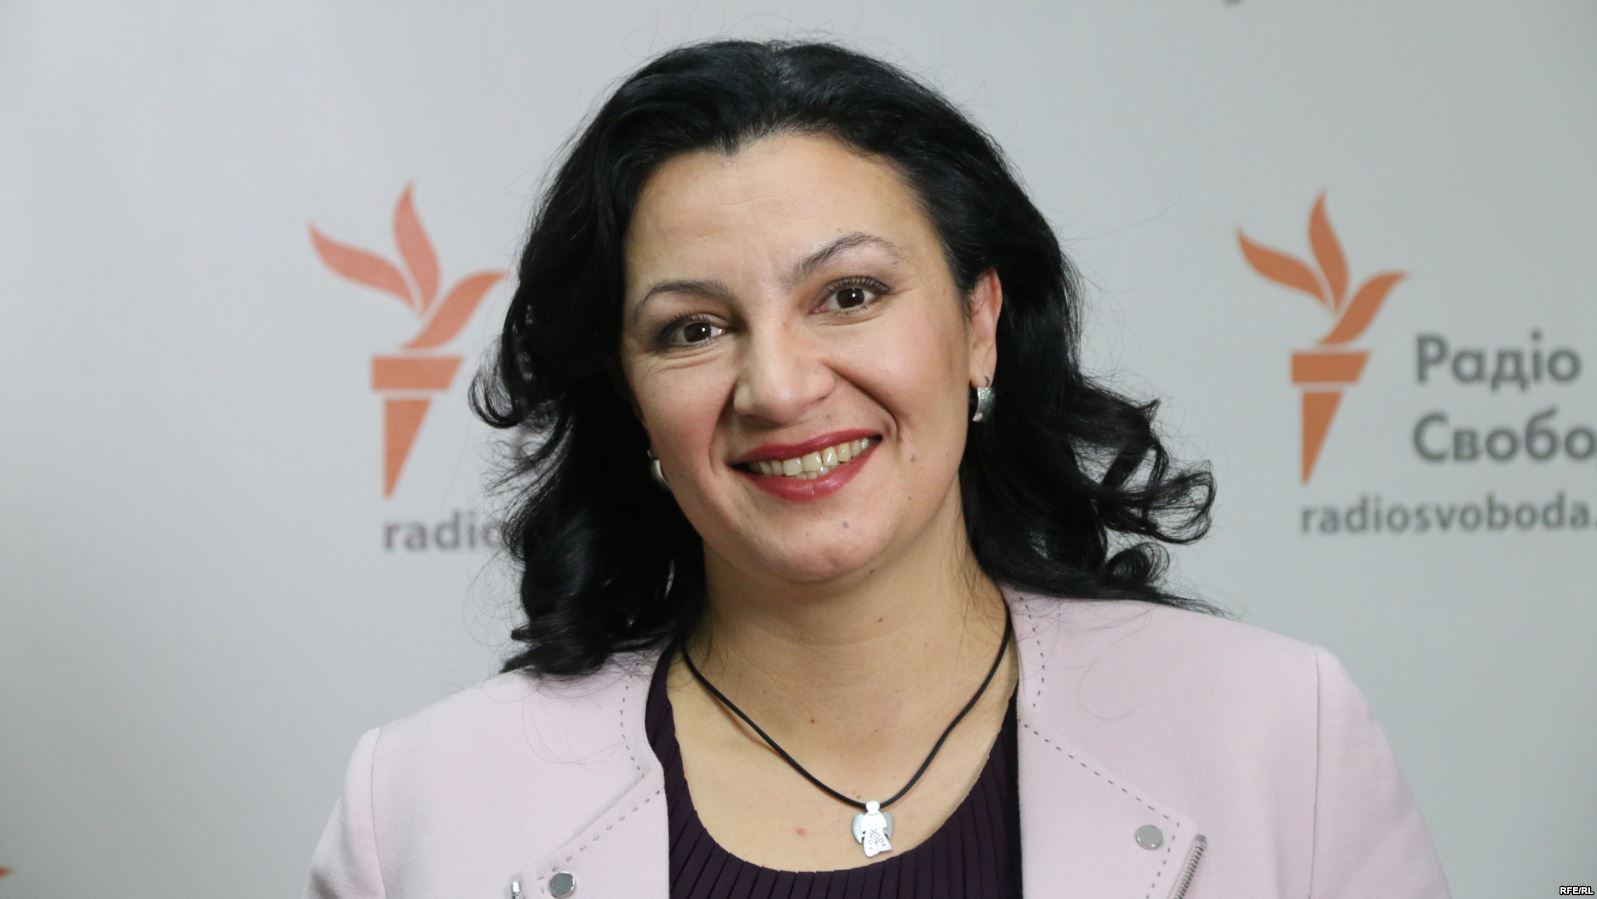 Ivanna Klympush-Tsintsadze